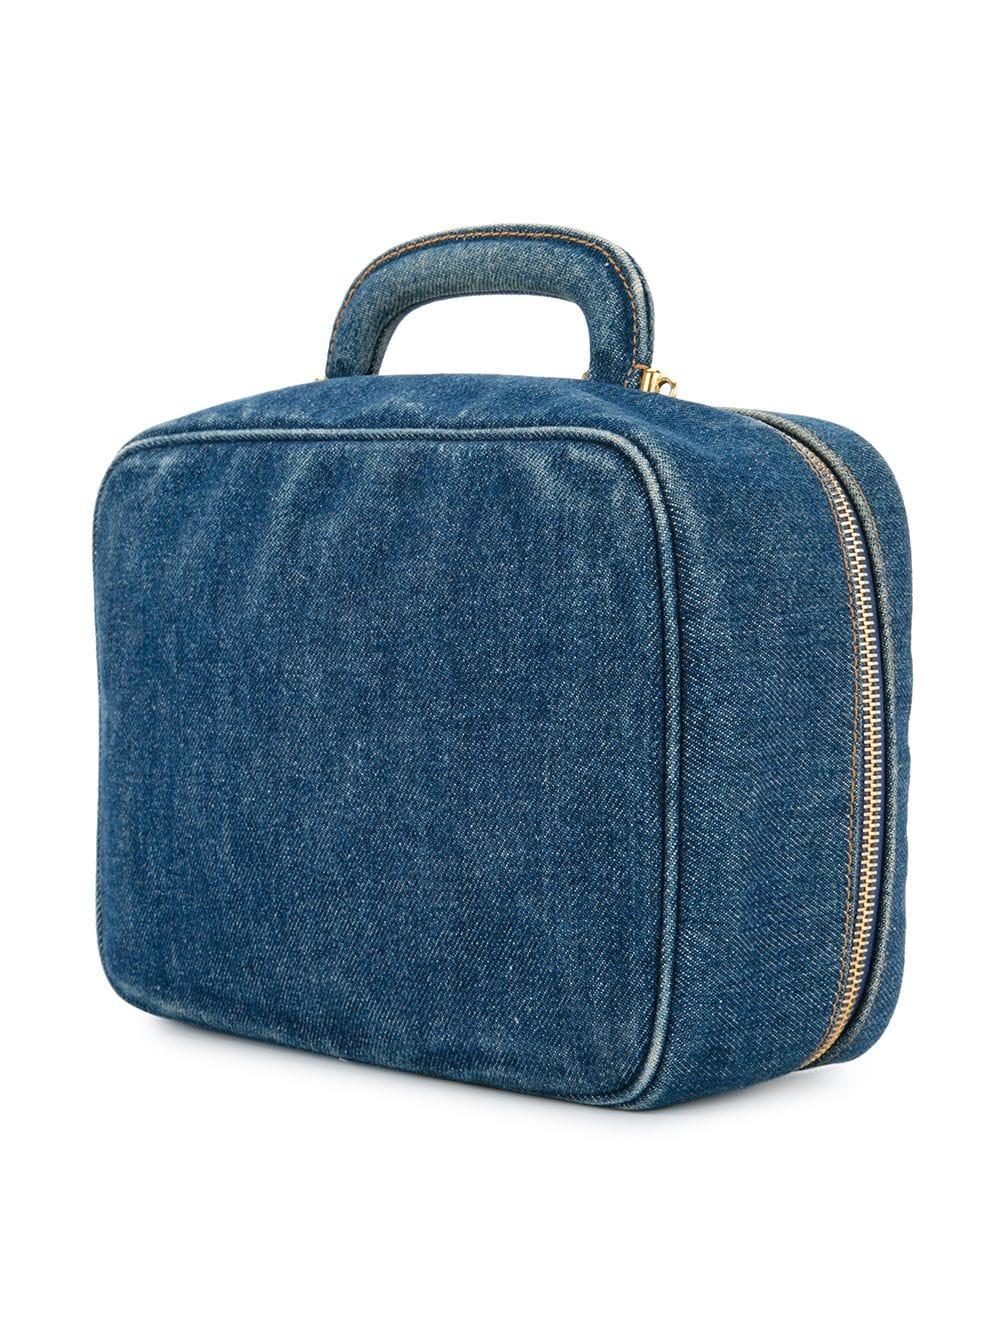 Women's or Men's Chanel Vanity Case Rare Vintage Blue Mini Crossbody Black Denim Shoulder Bag For Sale